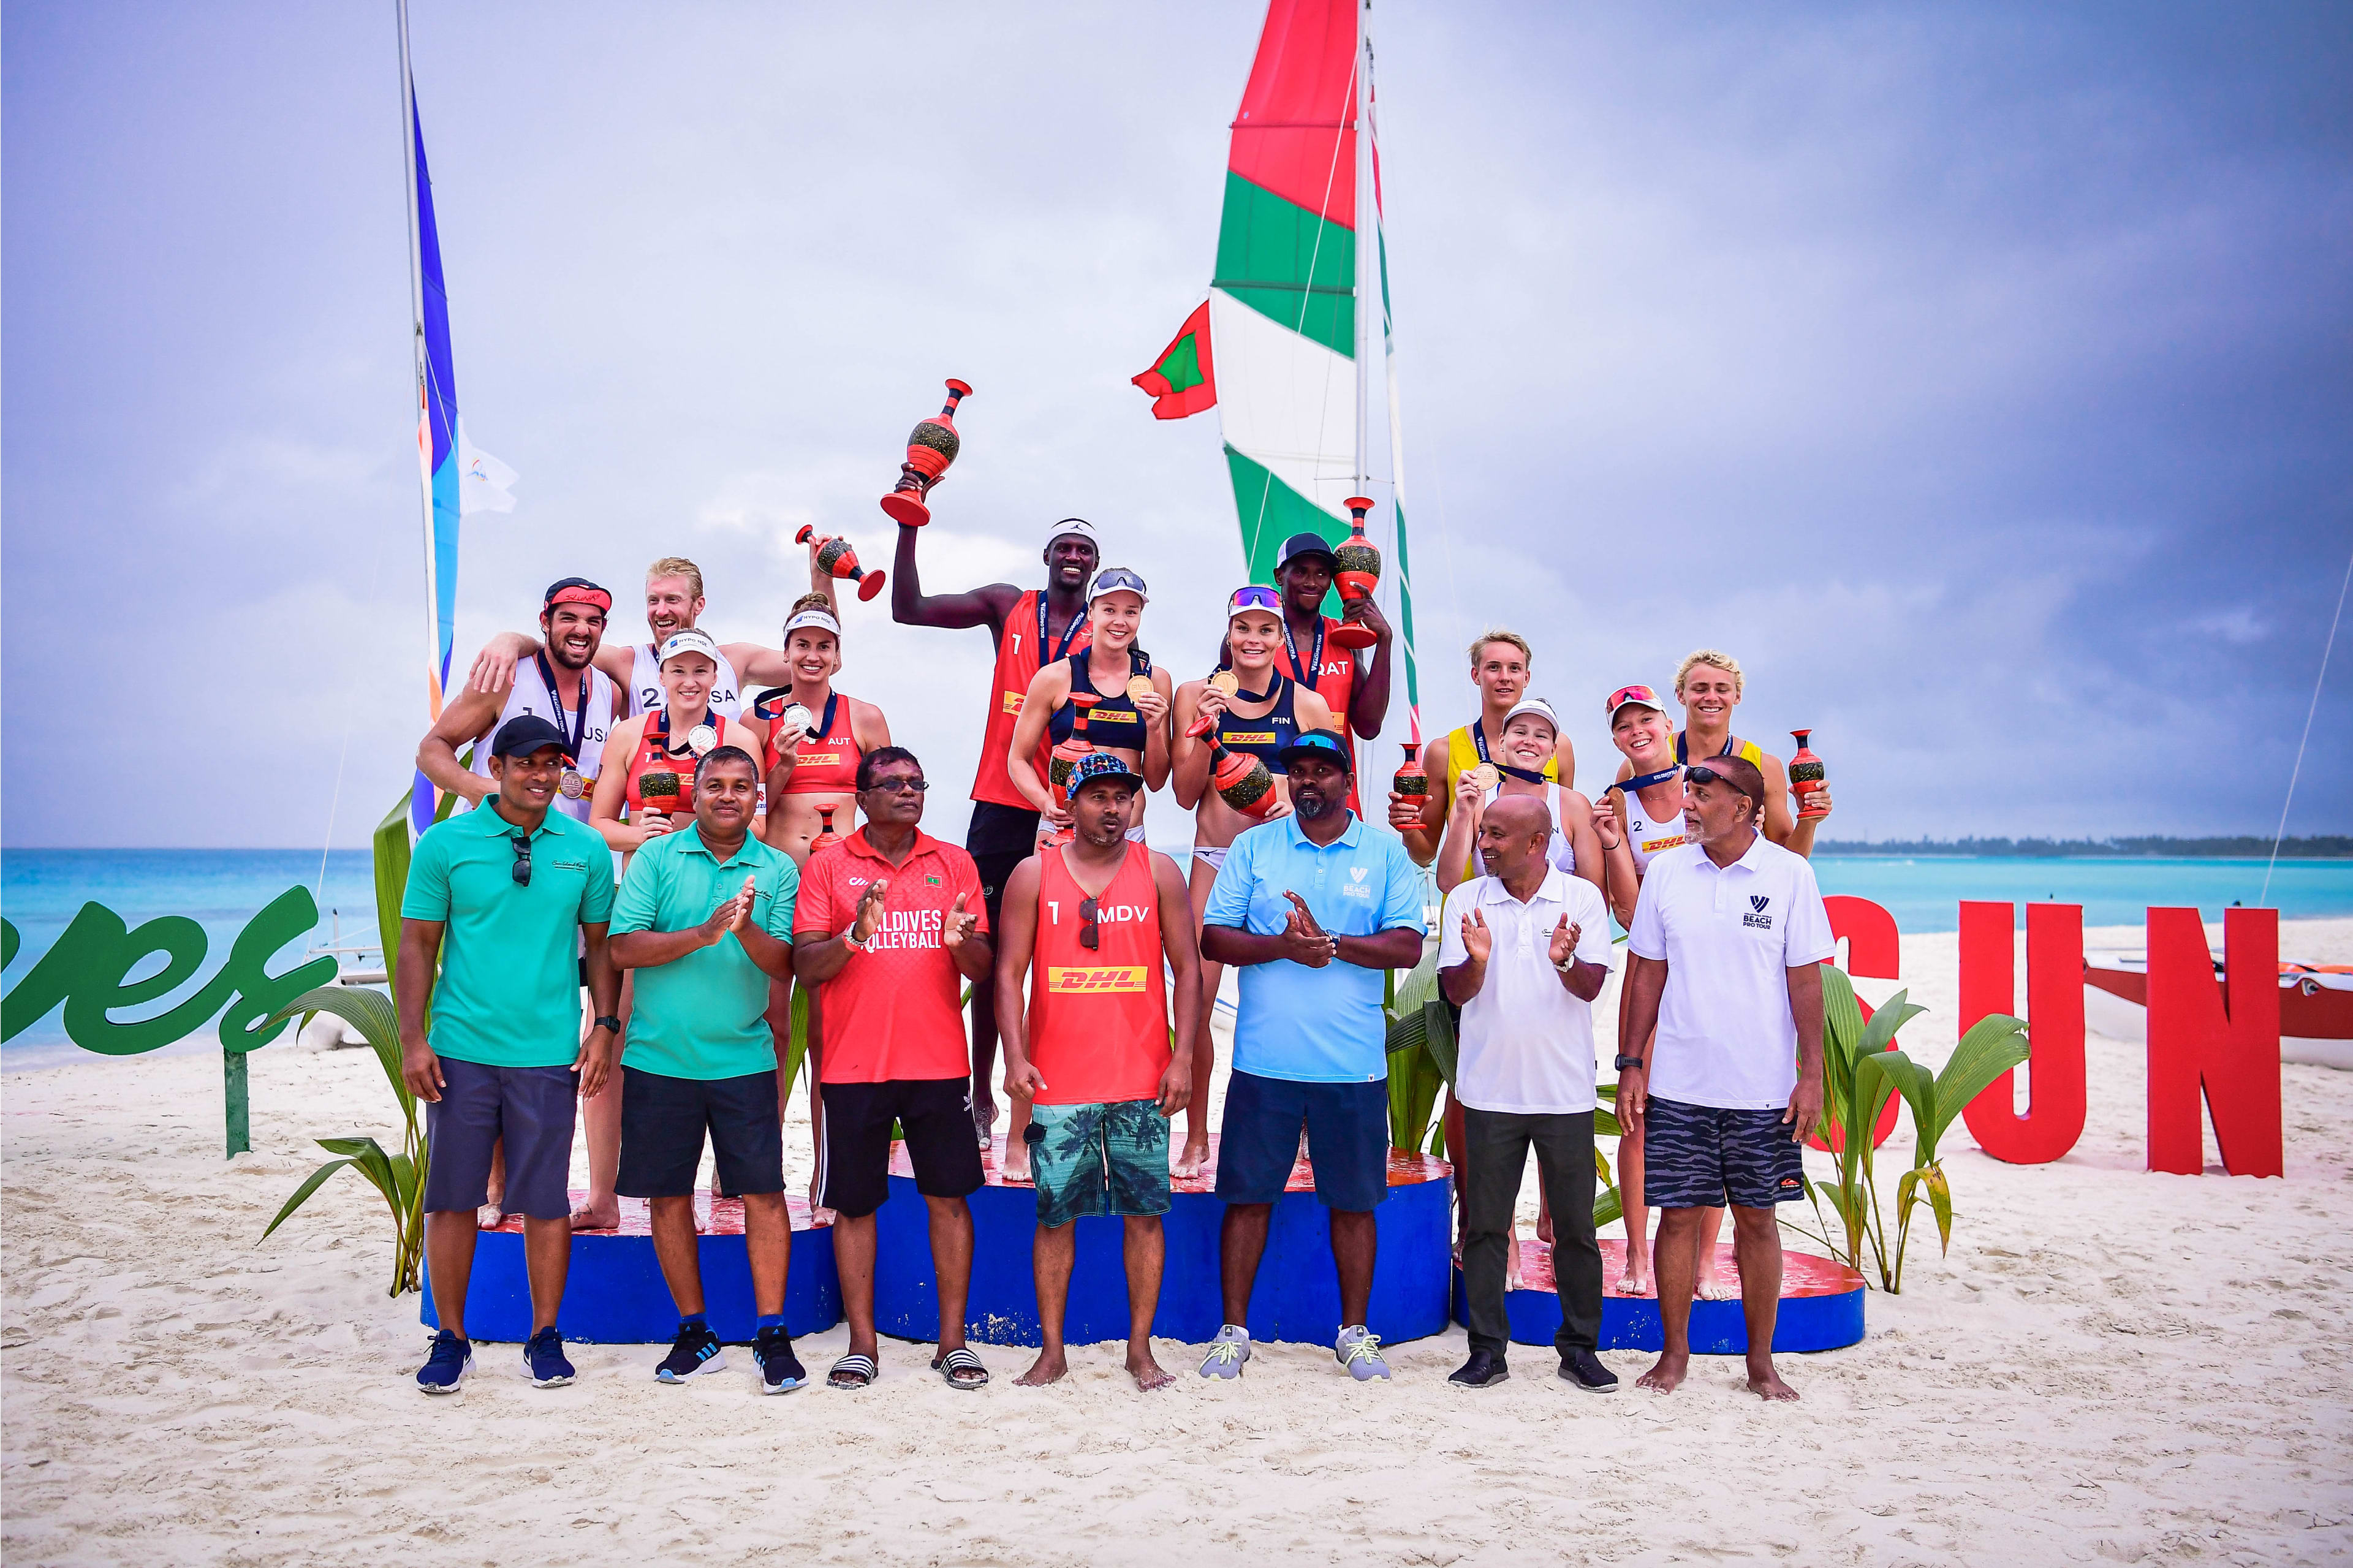 News - Duda claims Best Beach Volleyball Server award - Montpellier